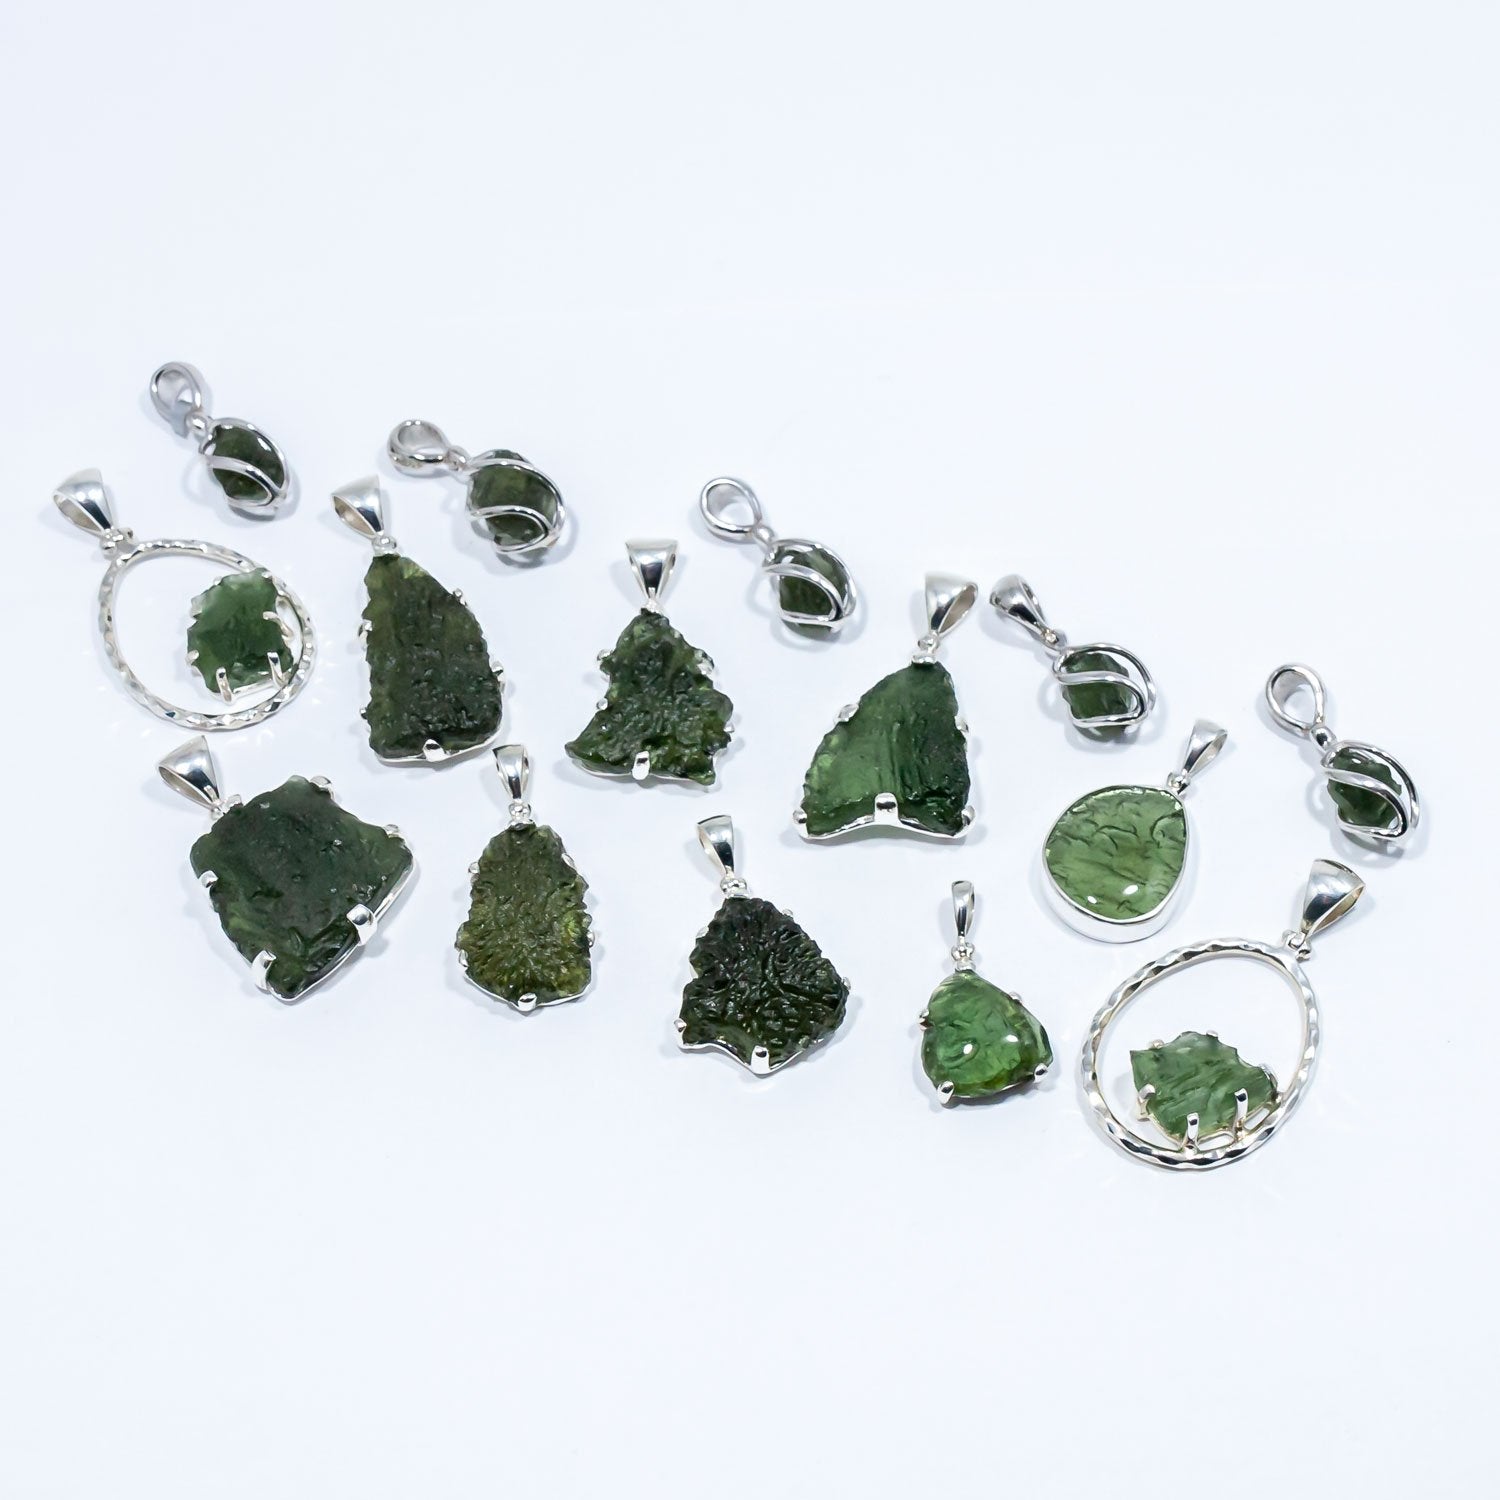 the moldavite pendants to choose from for the moldavite pendant necklace.